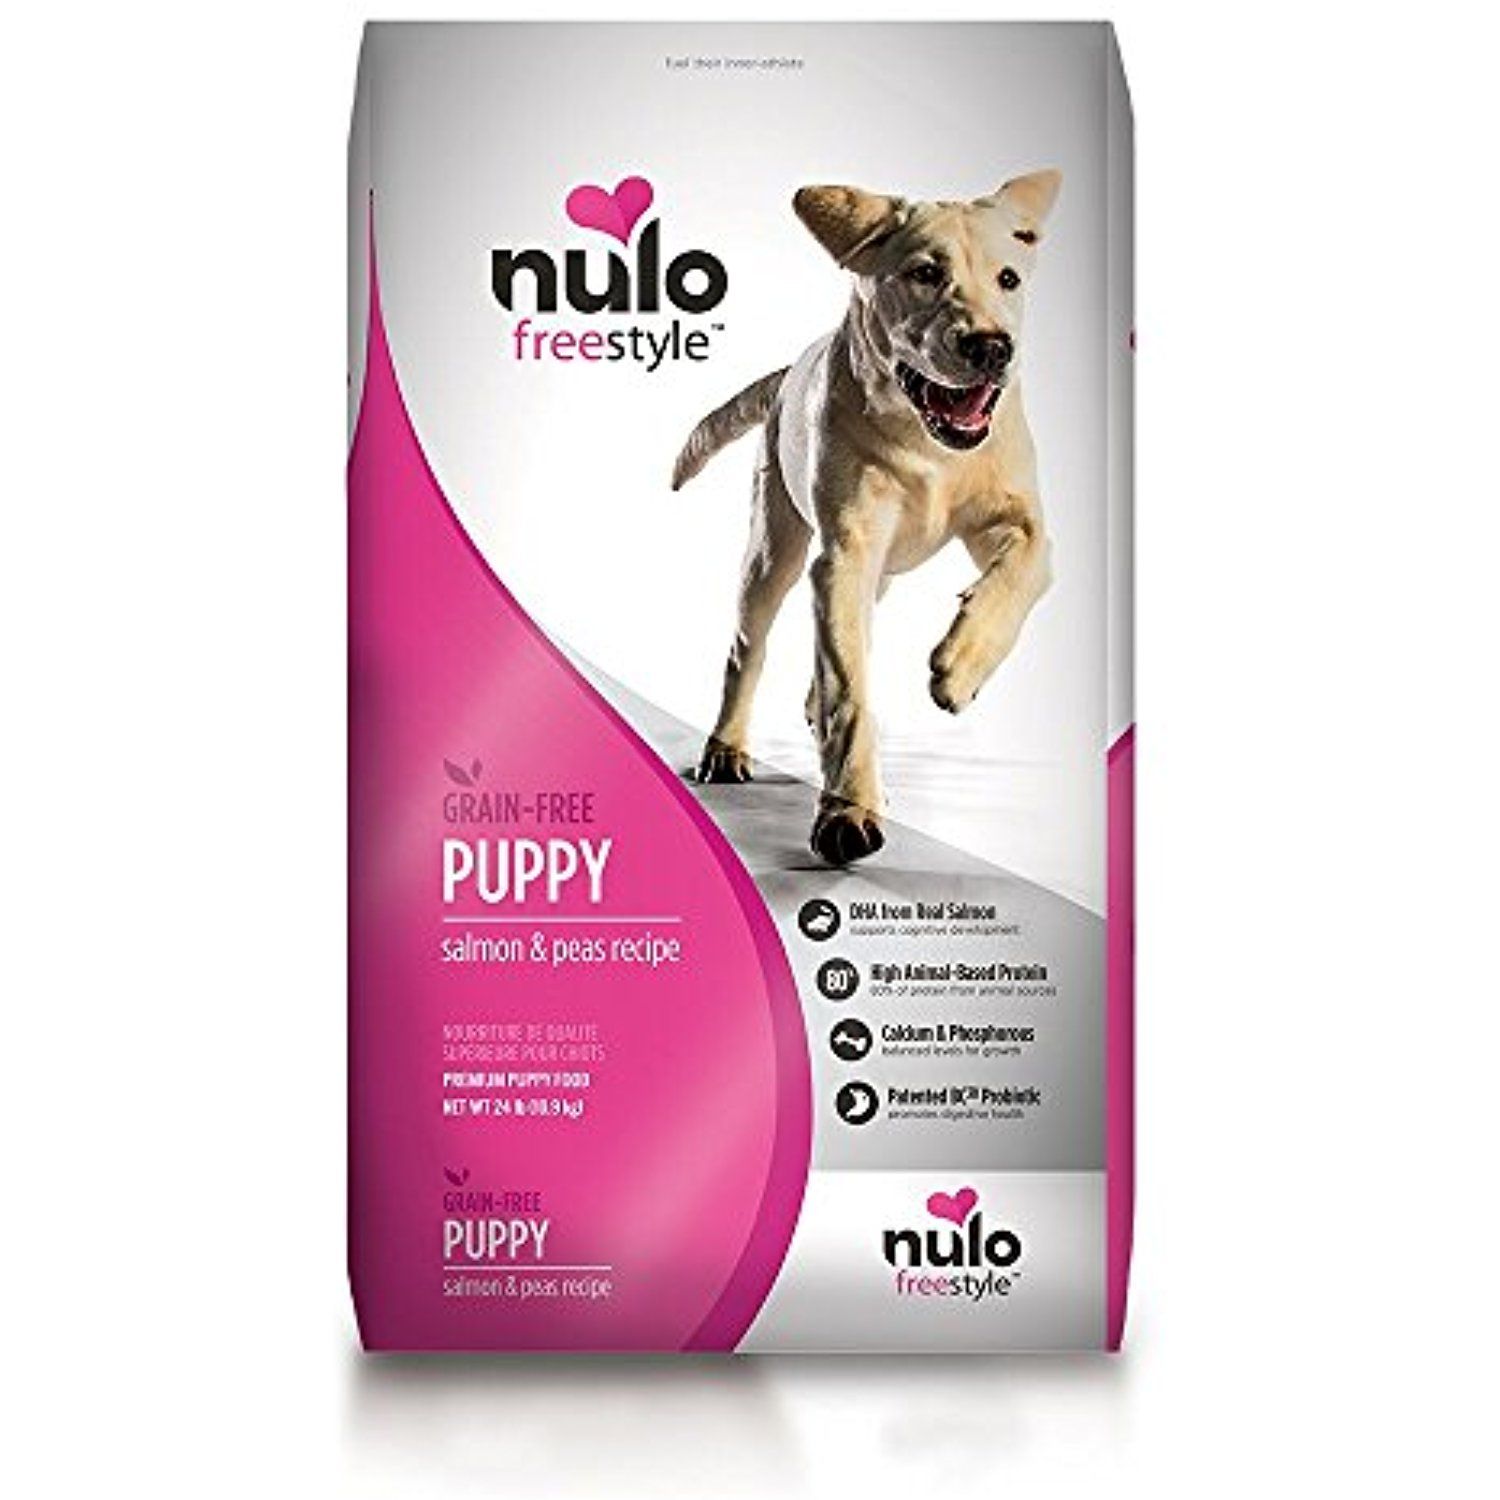 Nulo Freestyle dog food for bones, coat, and teeth development